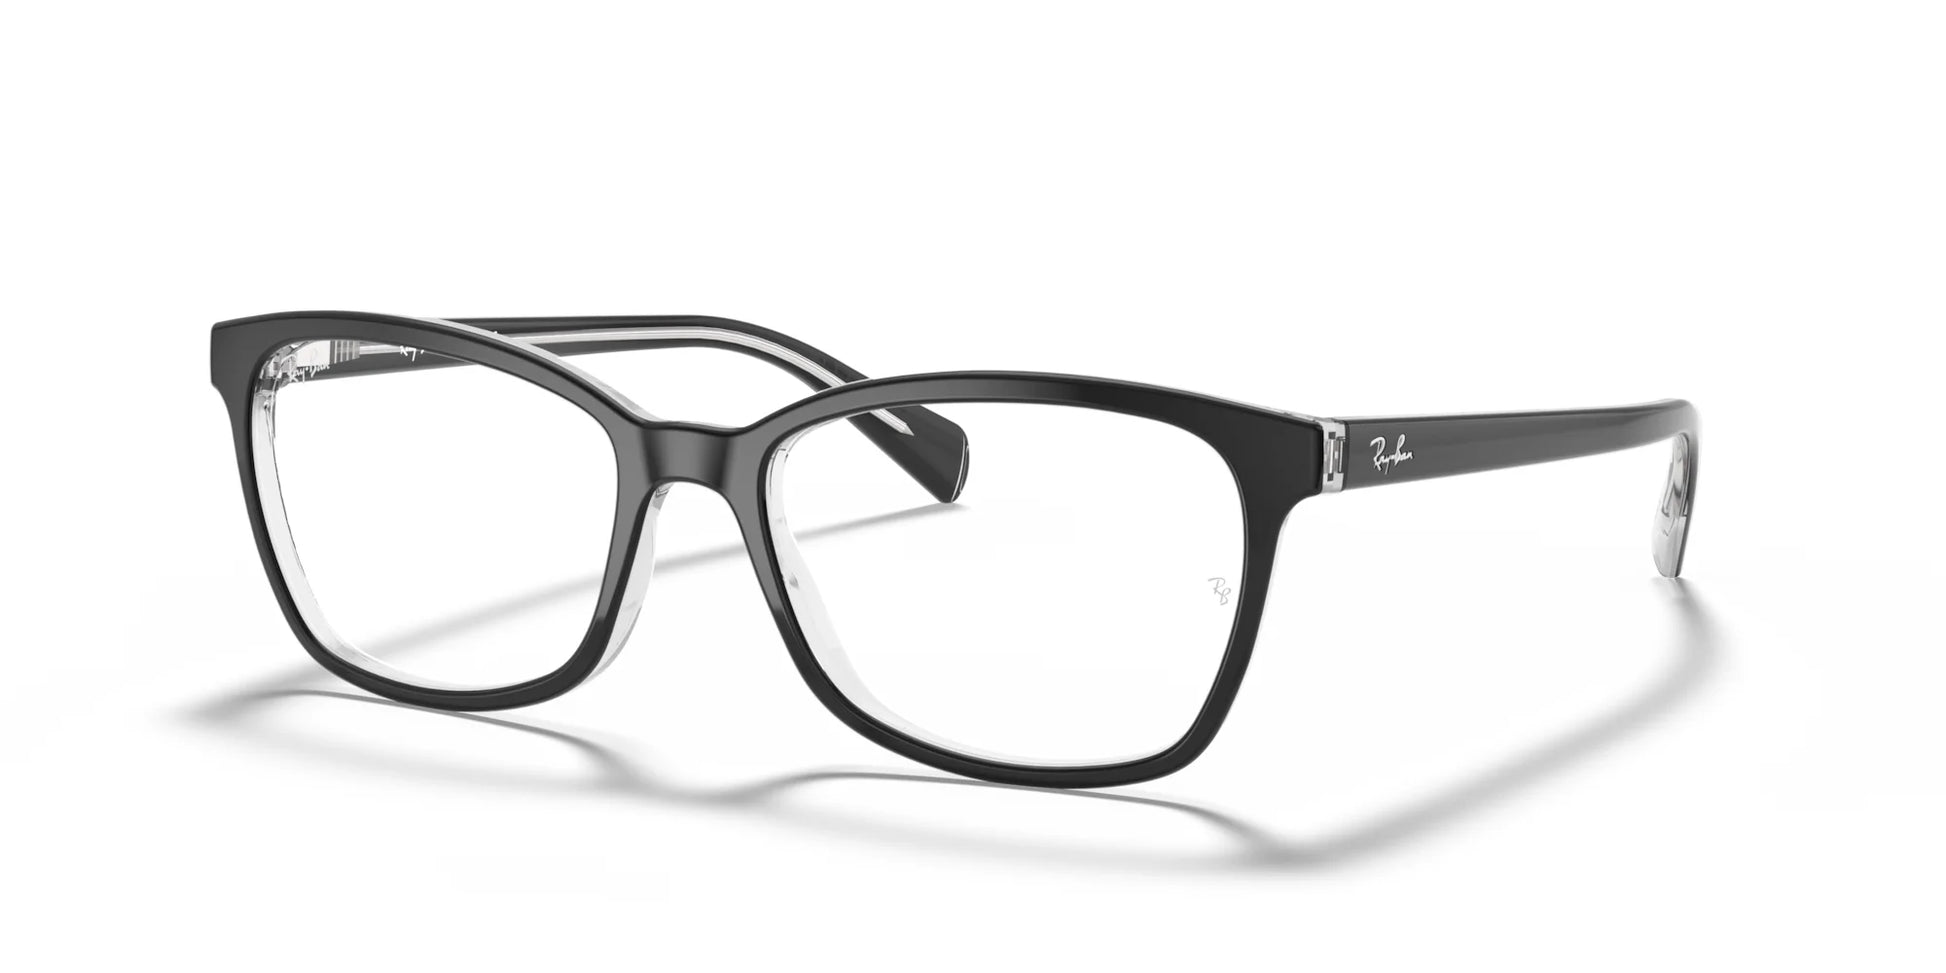 Ray-Ban RX5362 Eyeglasses Black On Transparent